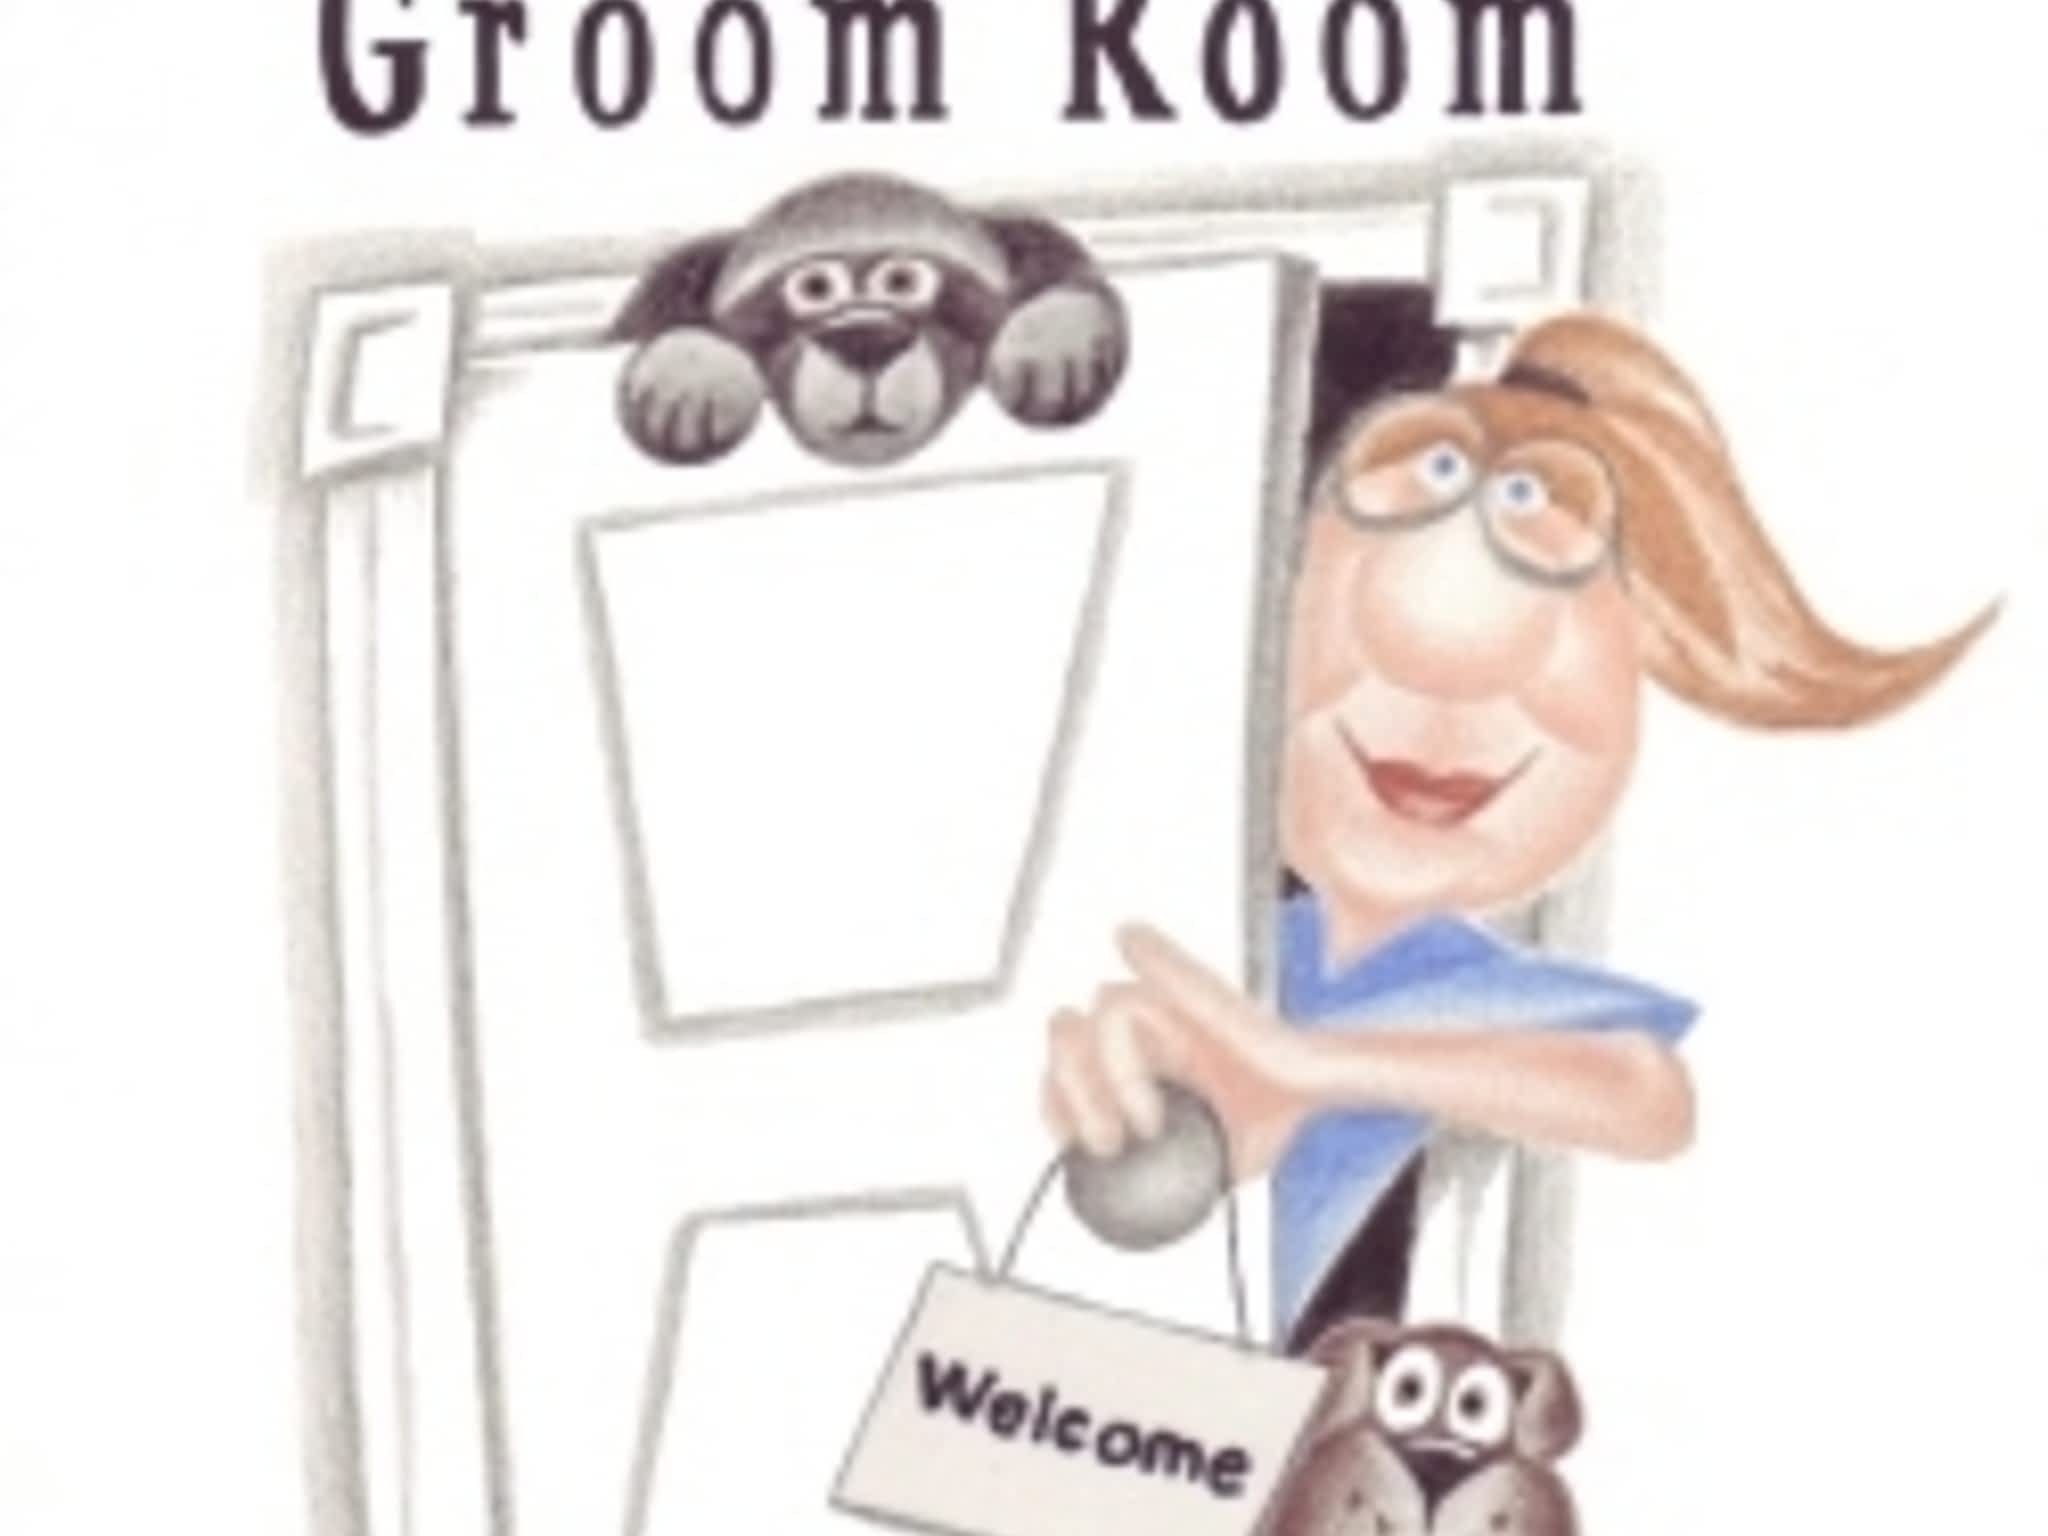 photo The Groom Room